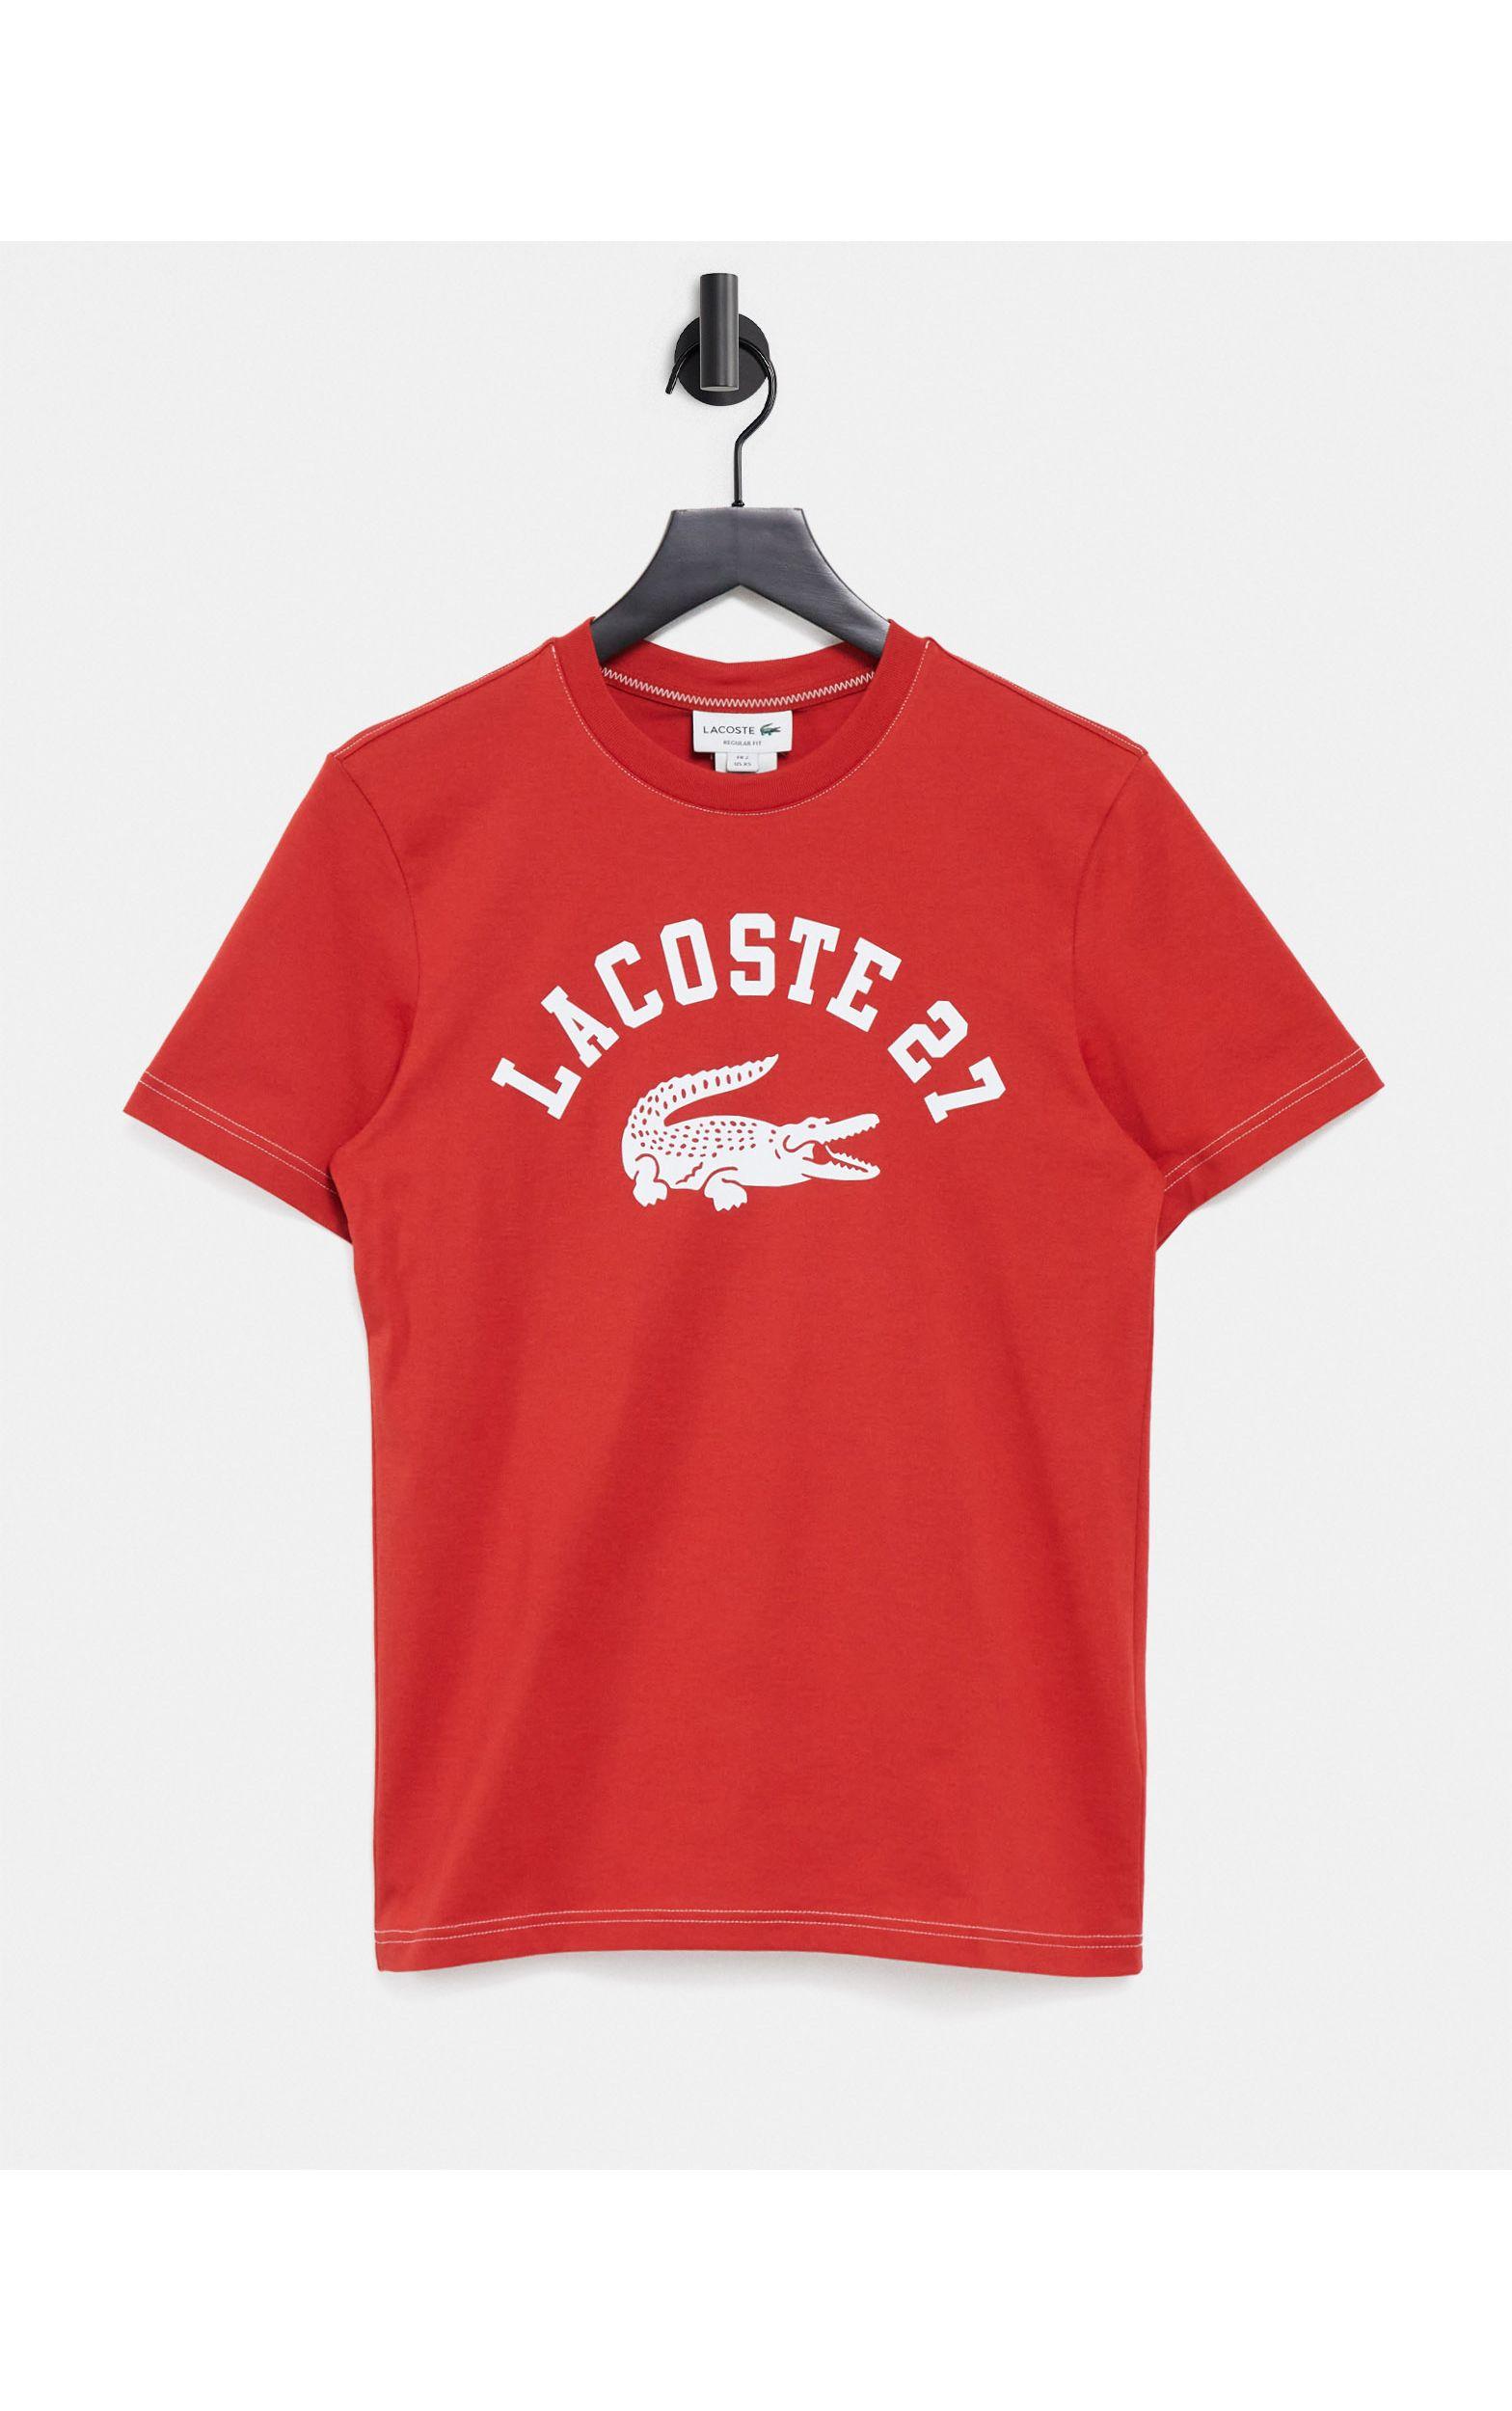 Buy > lacoste croc logo t shirt > in stock